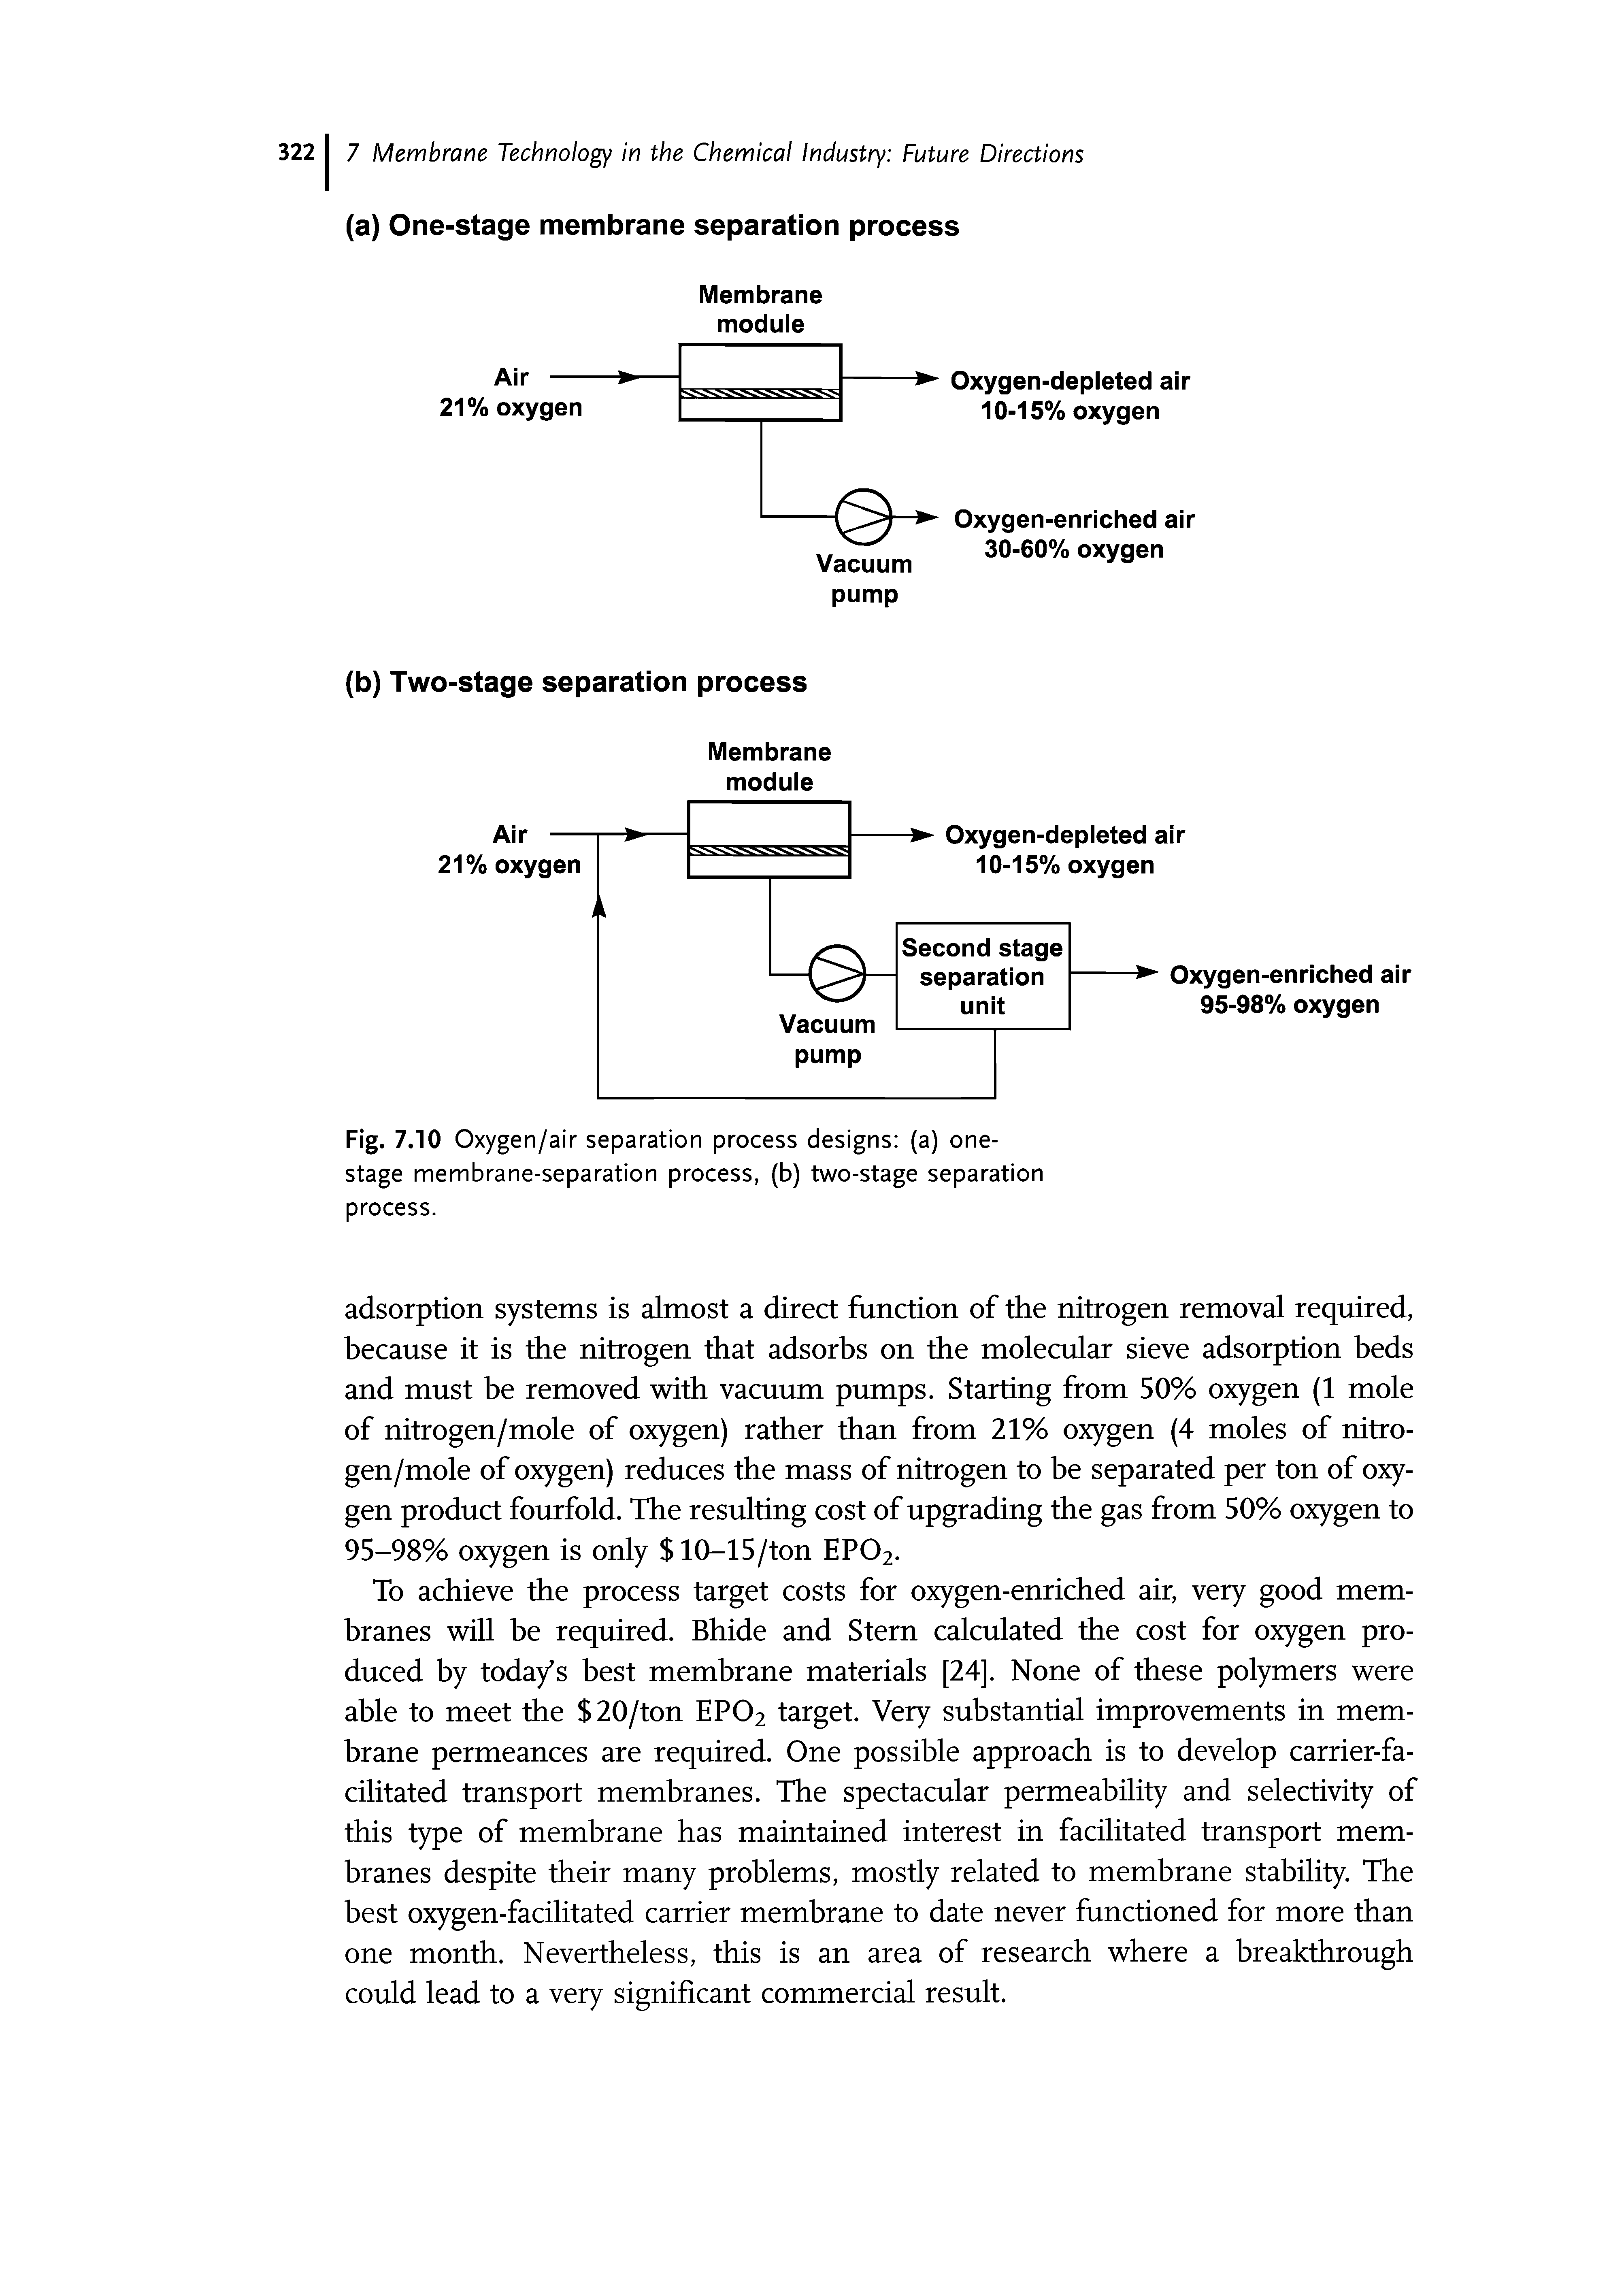 Fig. 7.10 Oxygen/air separation process designs (a) one-stage membrane-separation process, (b) two-stage separation process.